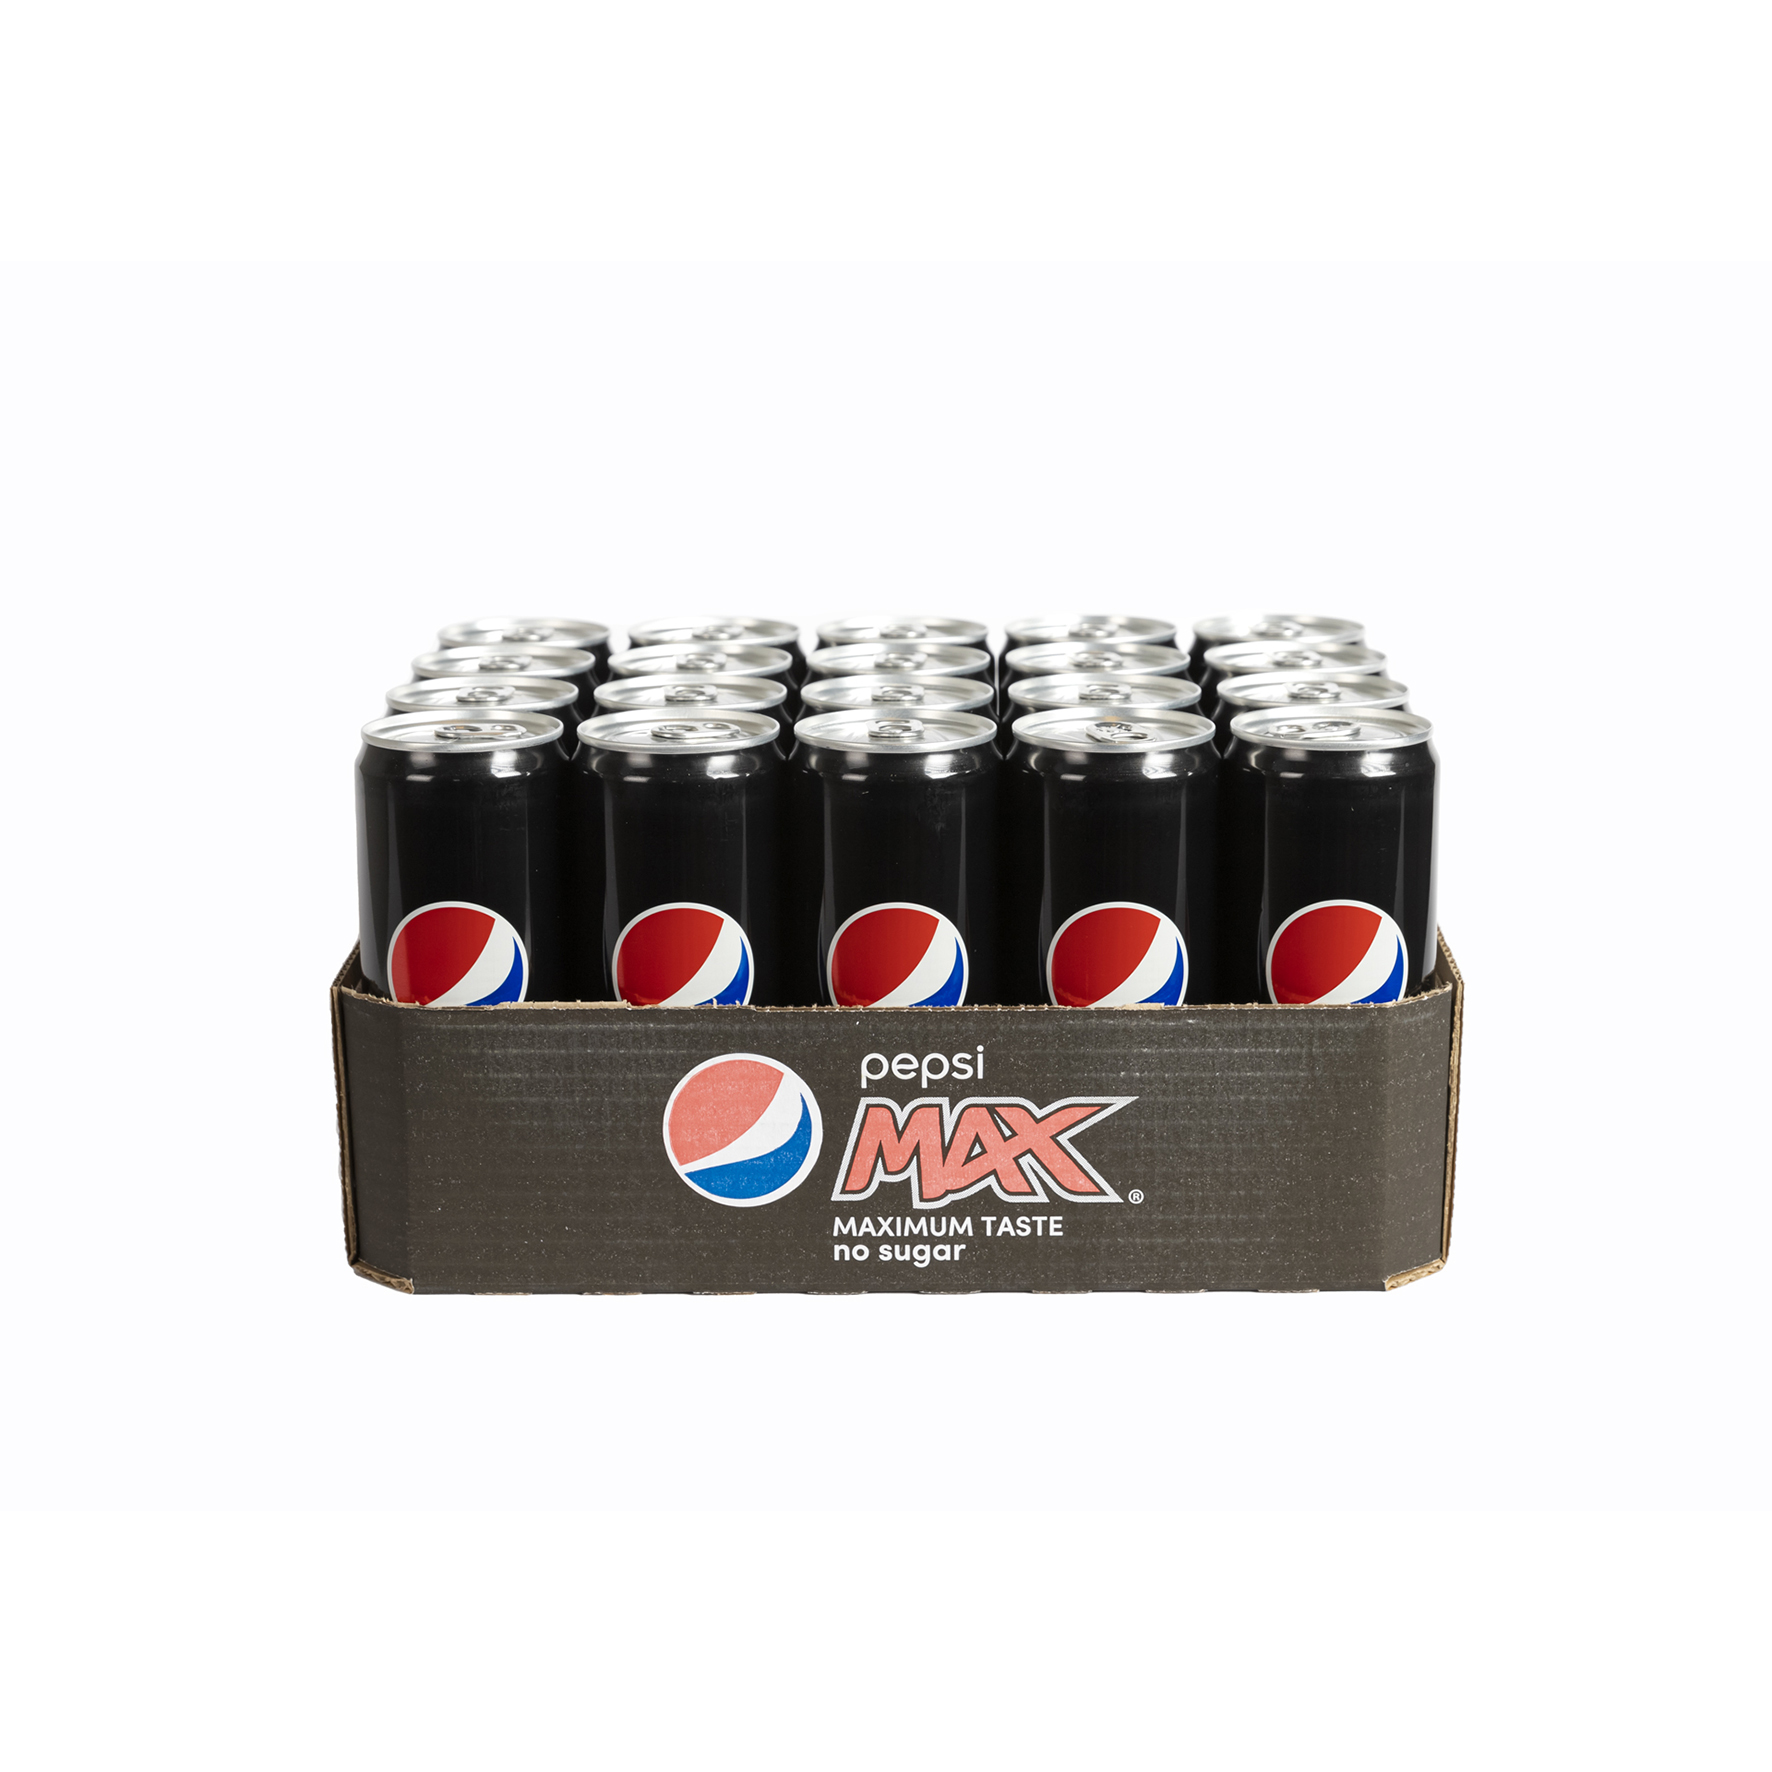 [8560085] Pepsi Max 33cl sleek can